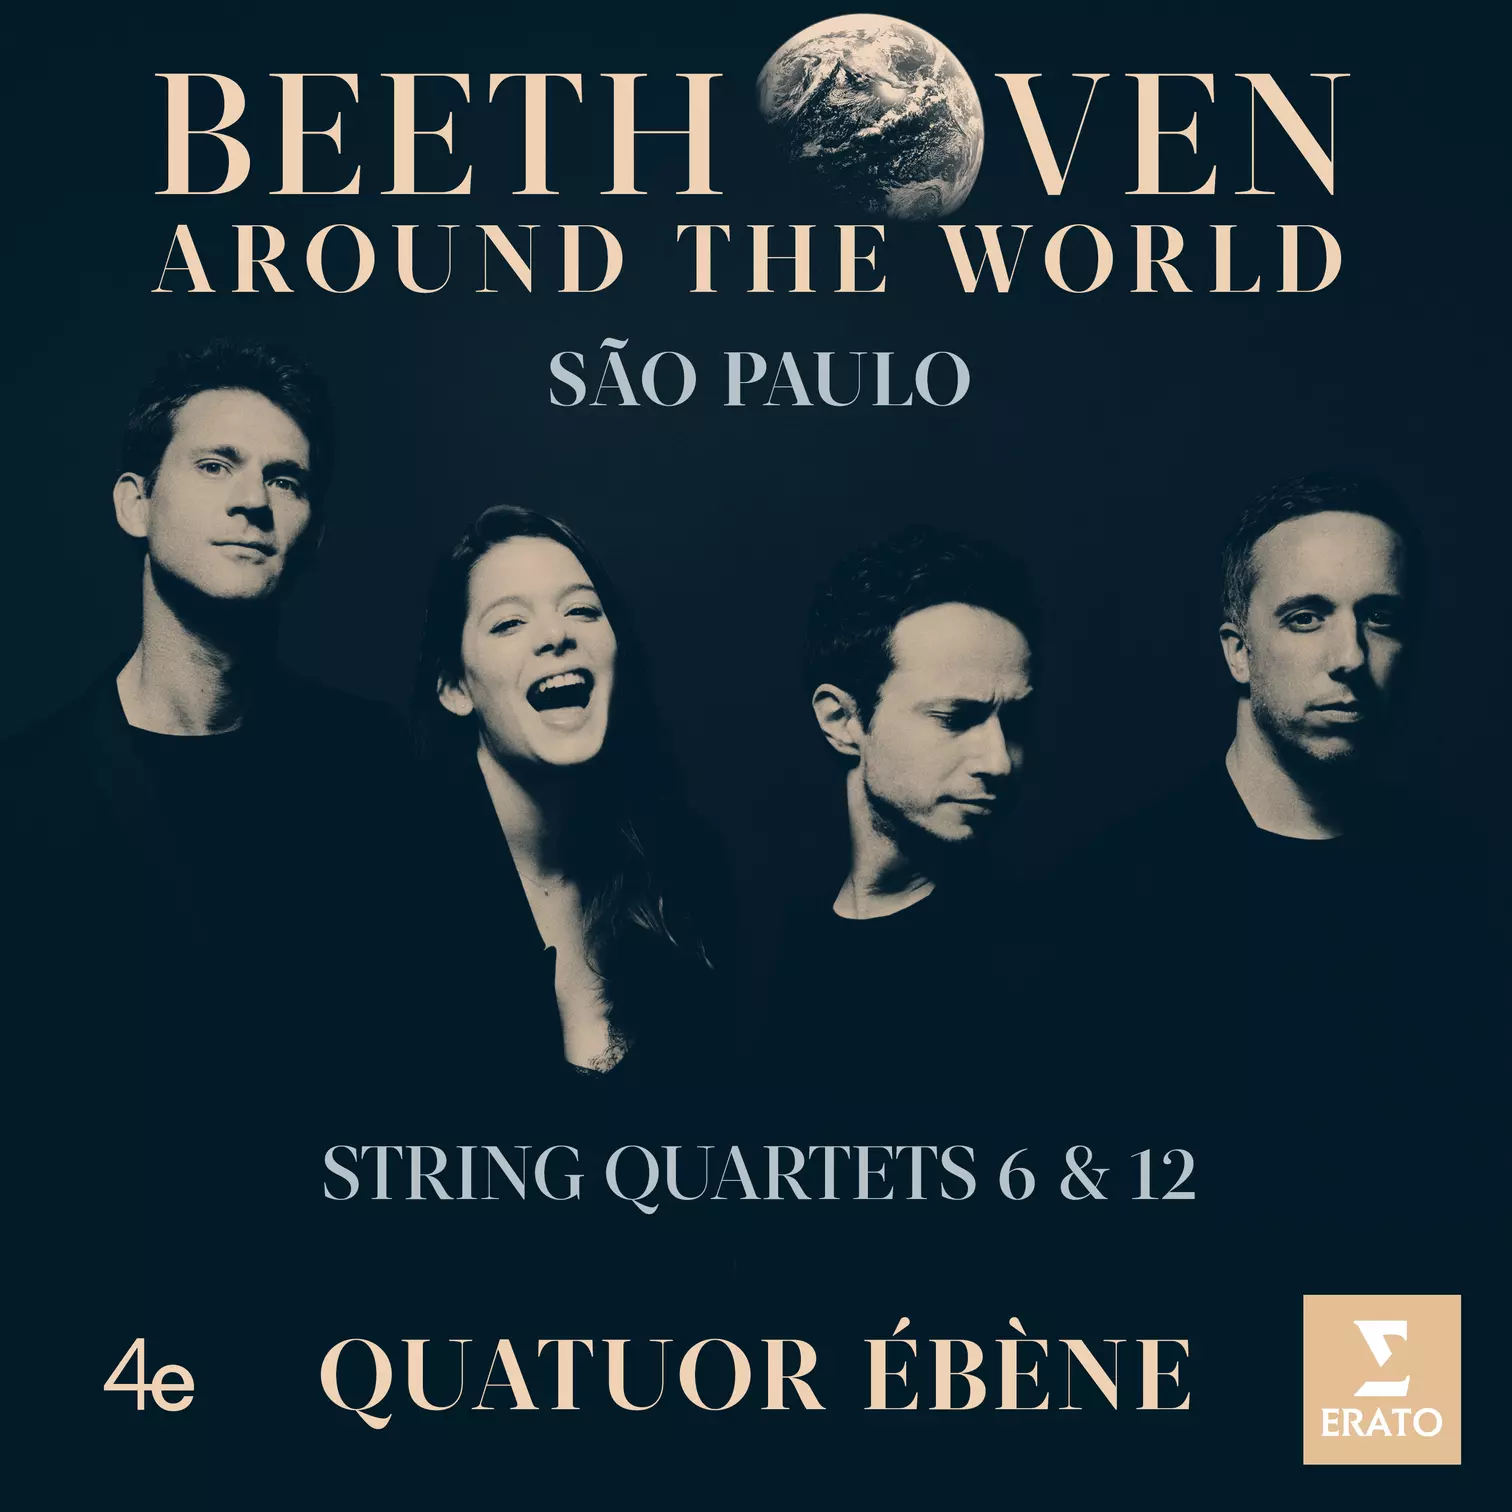 Beethoven Around the World - São Paulo - String Quartets 6 & 12